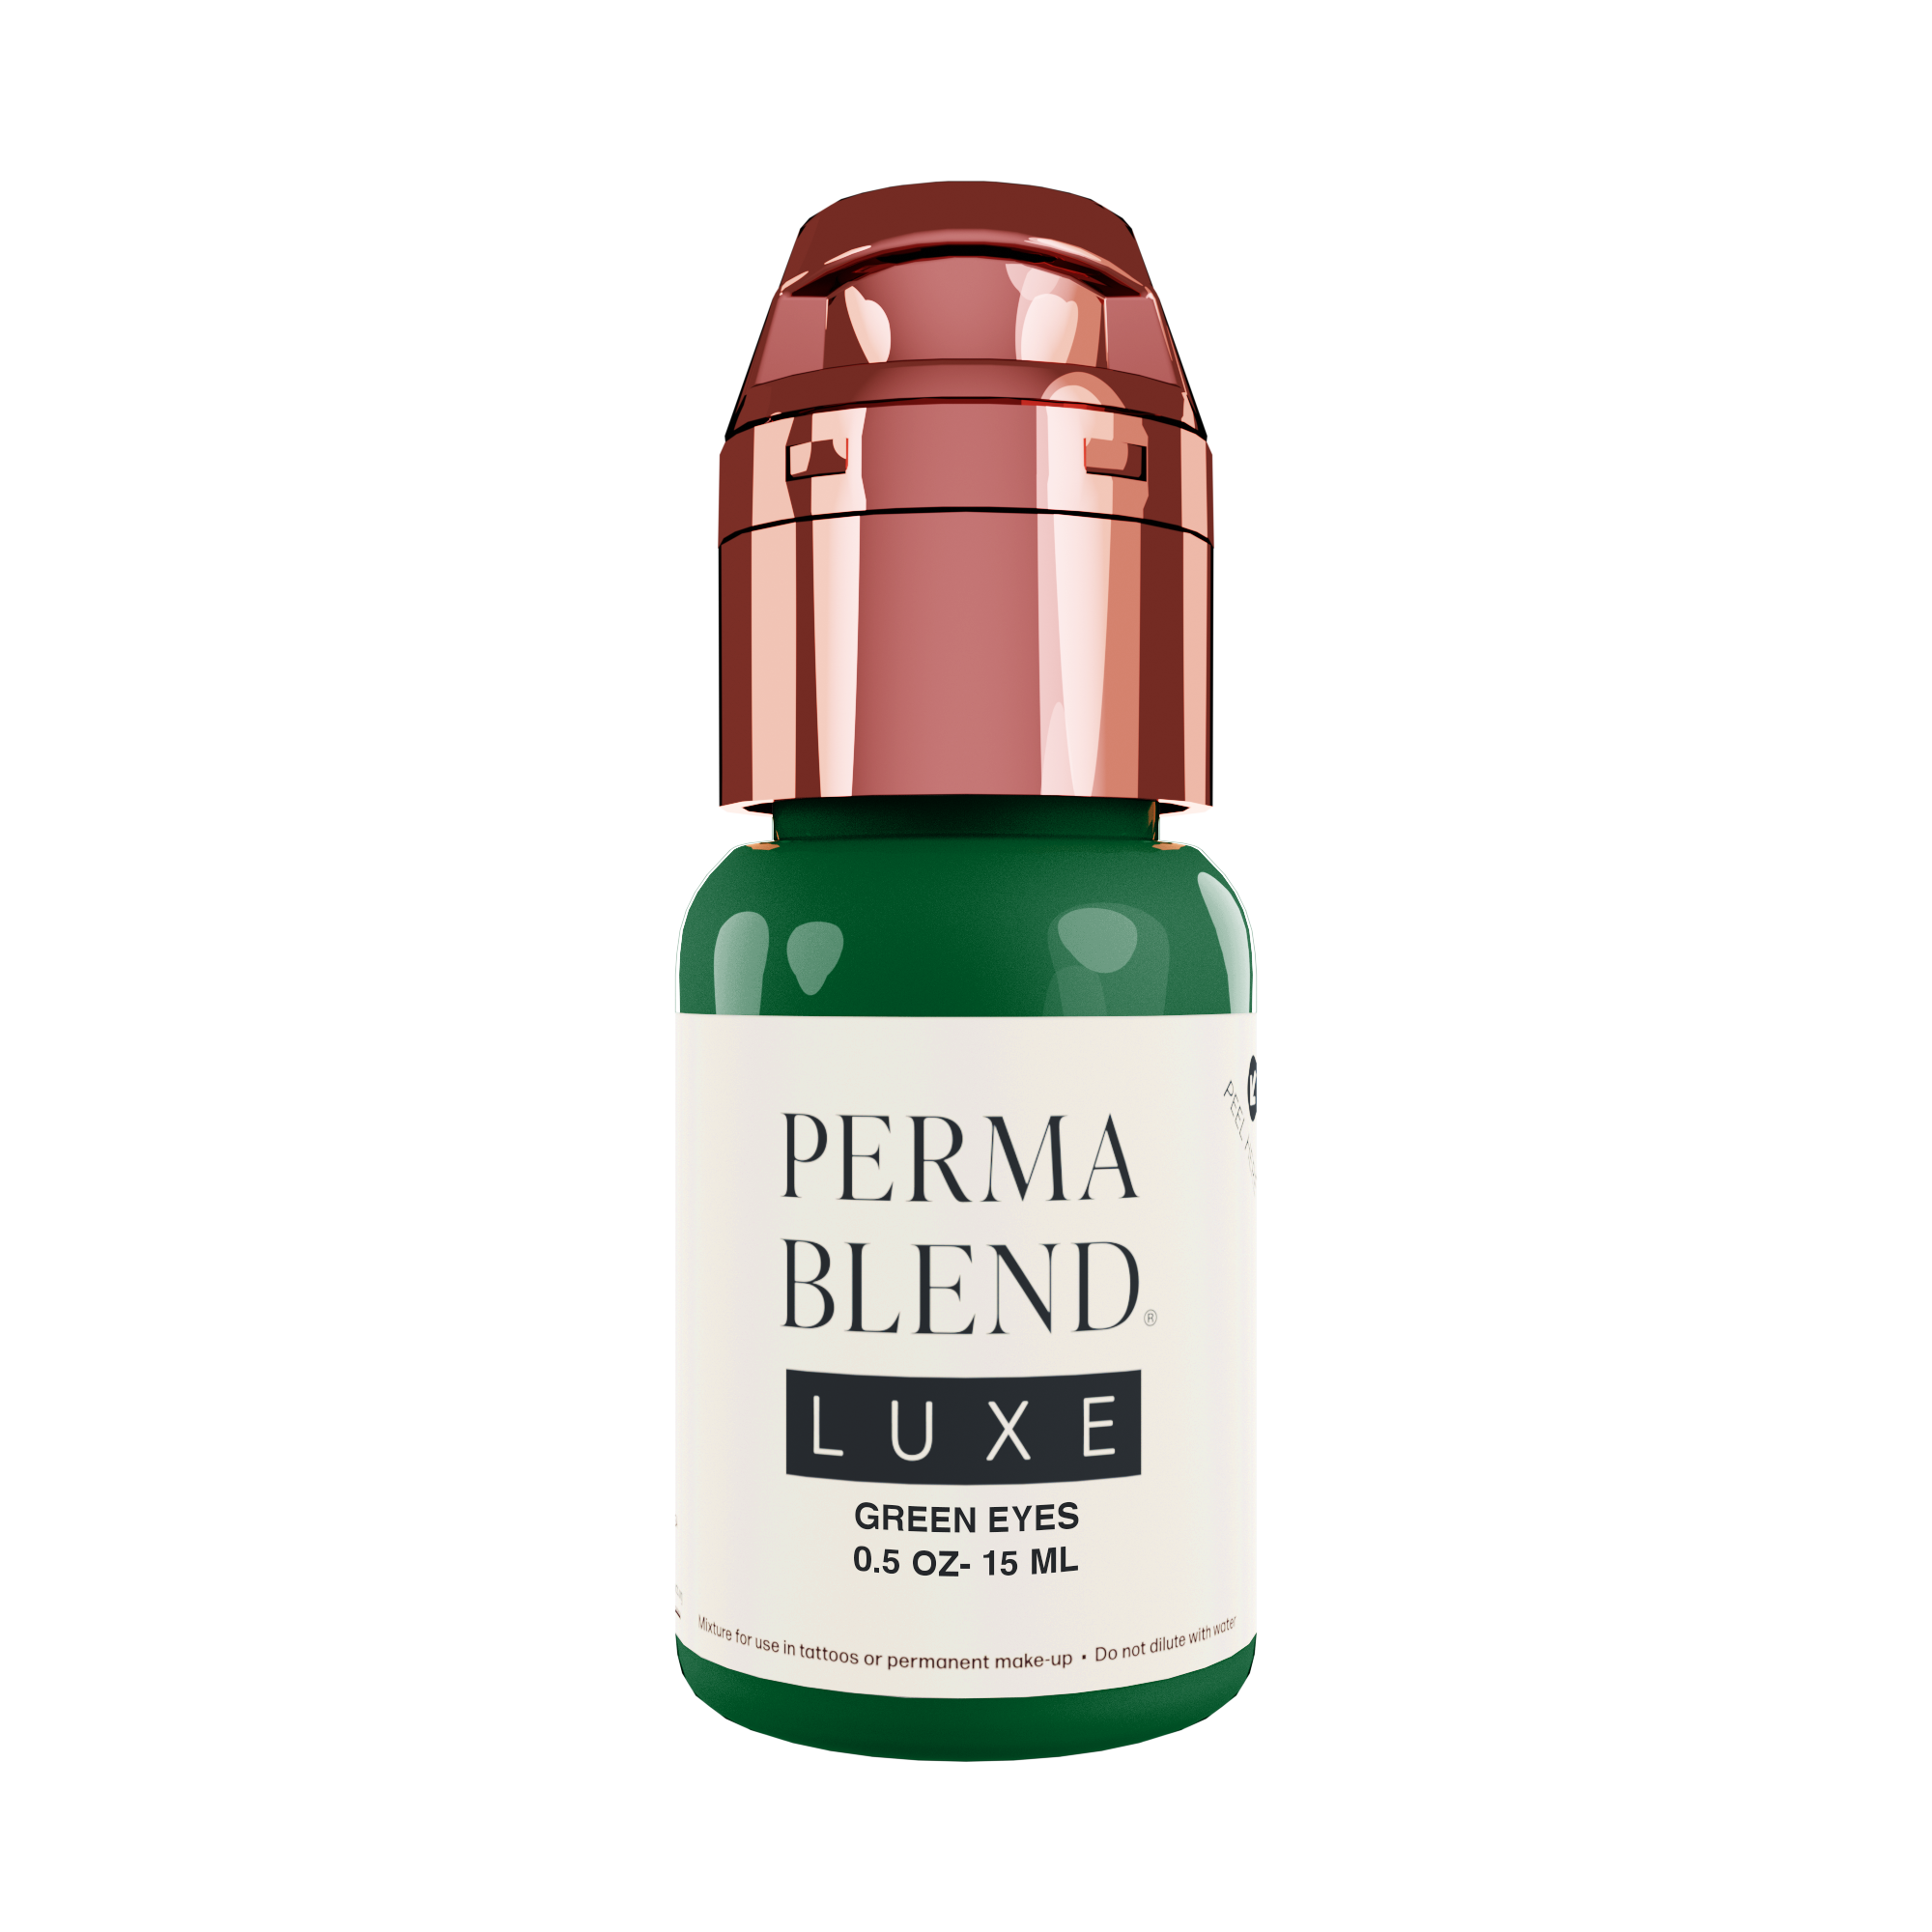 Perma Blend Luxe Pigment Green Eyes Eyeliner Pigment, Permanent Makeup Pigment